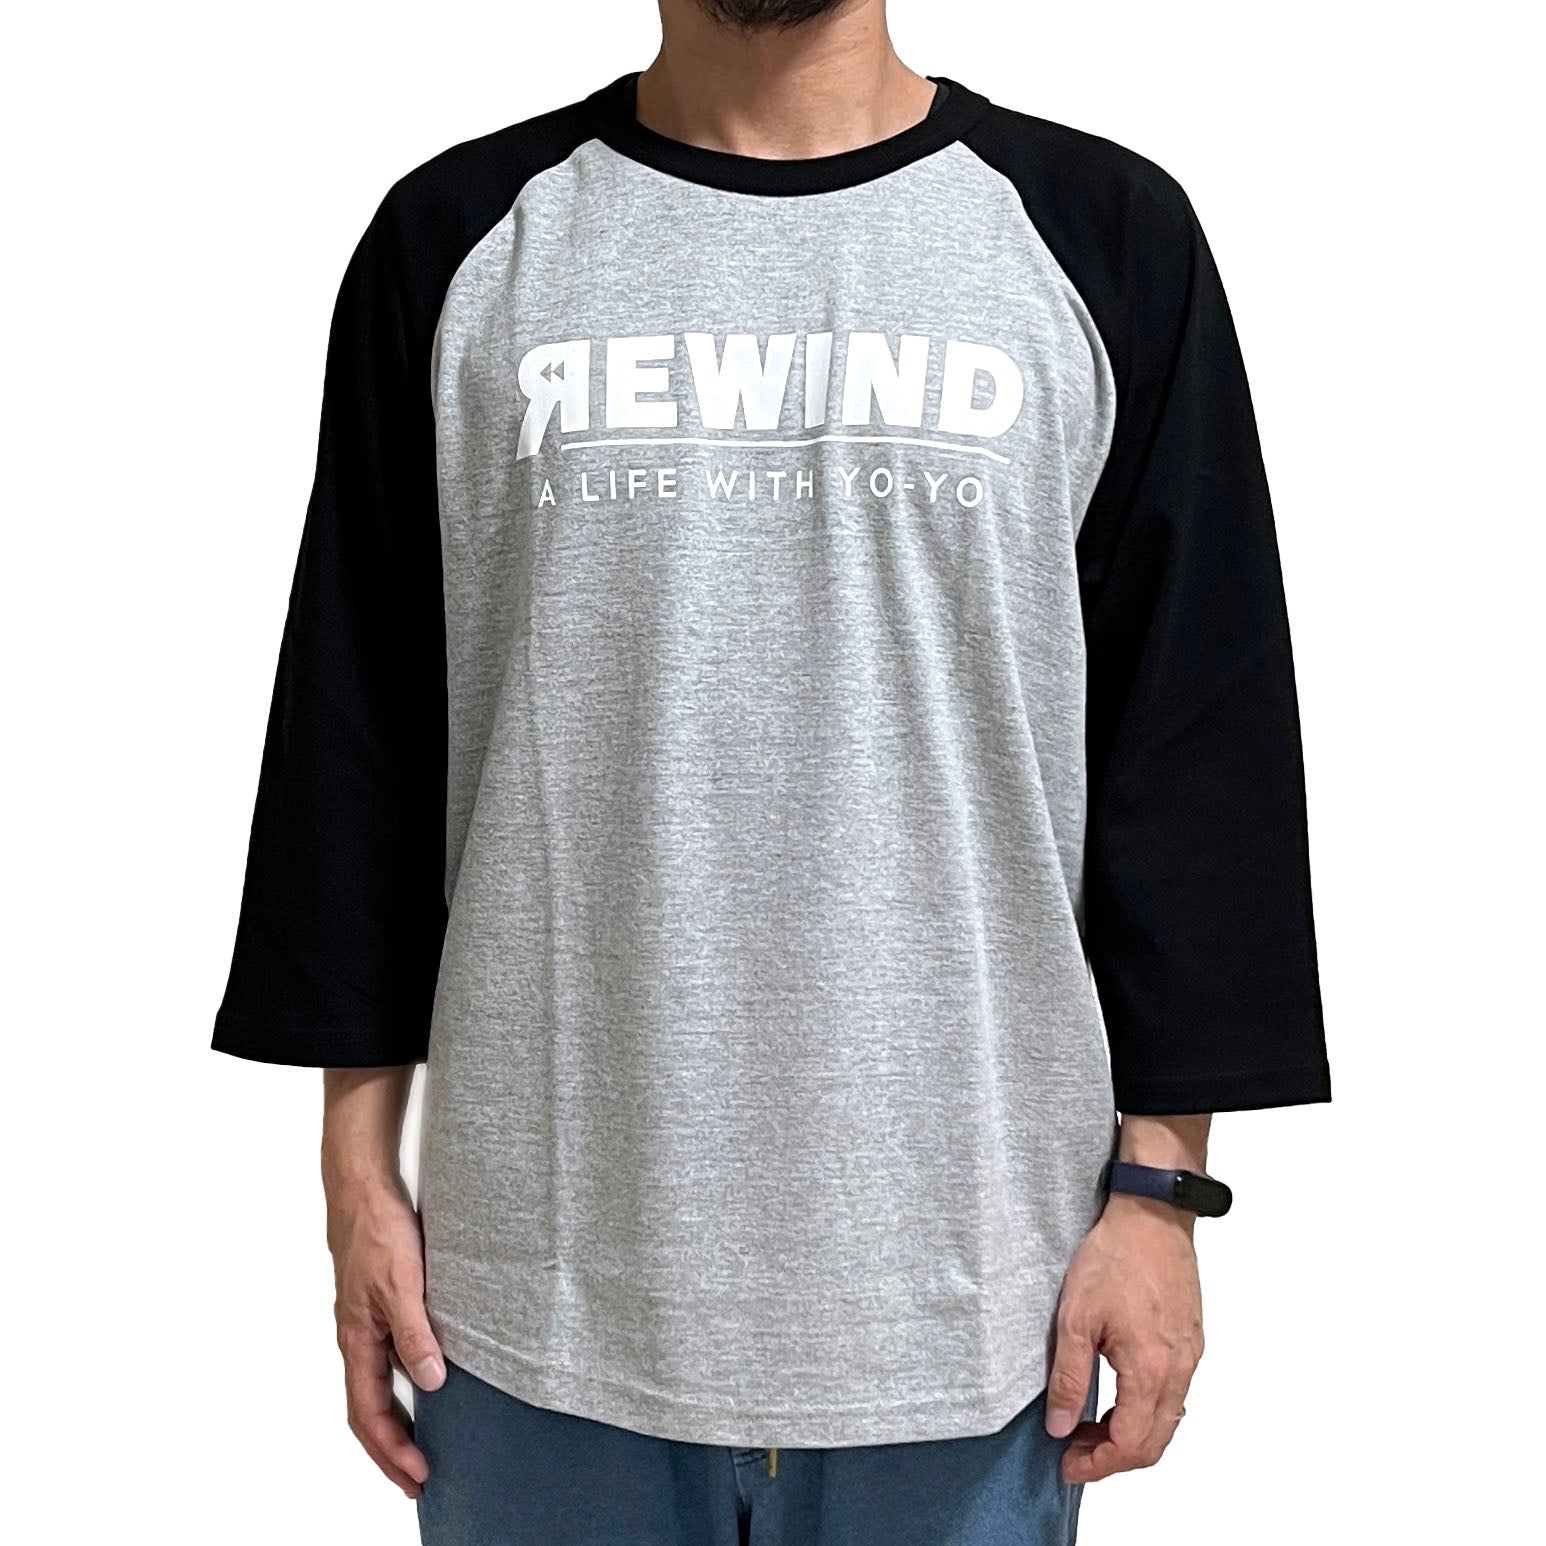 REWIND 3/4 Sleeves T-shirt